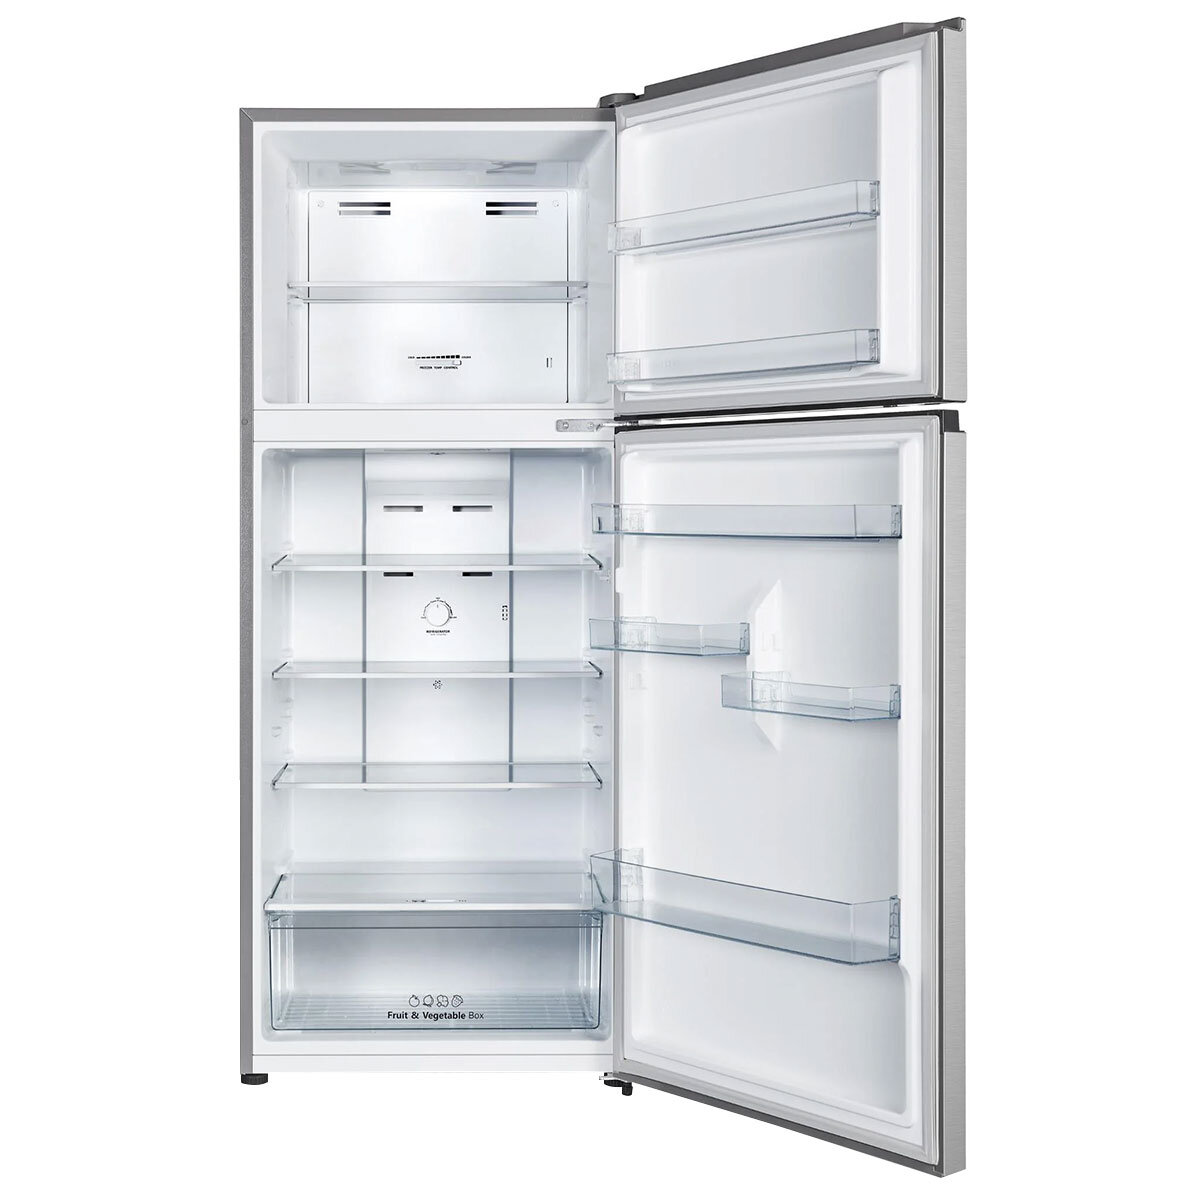 Hisense 424L Top Mount Refrigerator Stainless HRTF424S